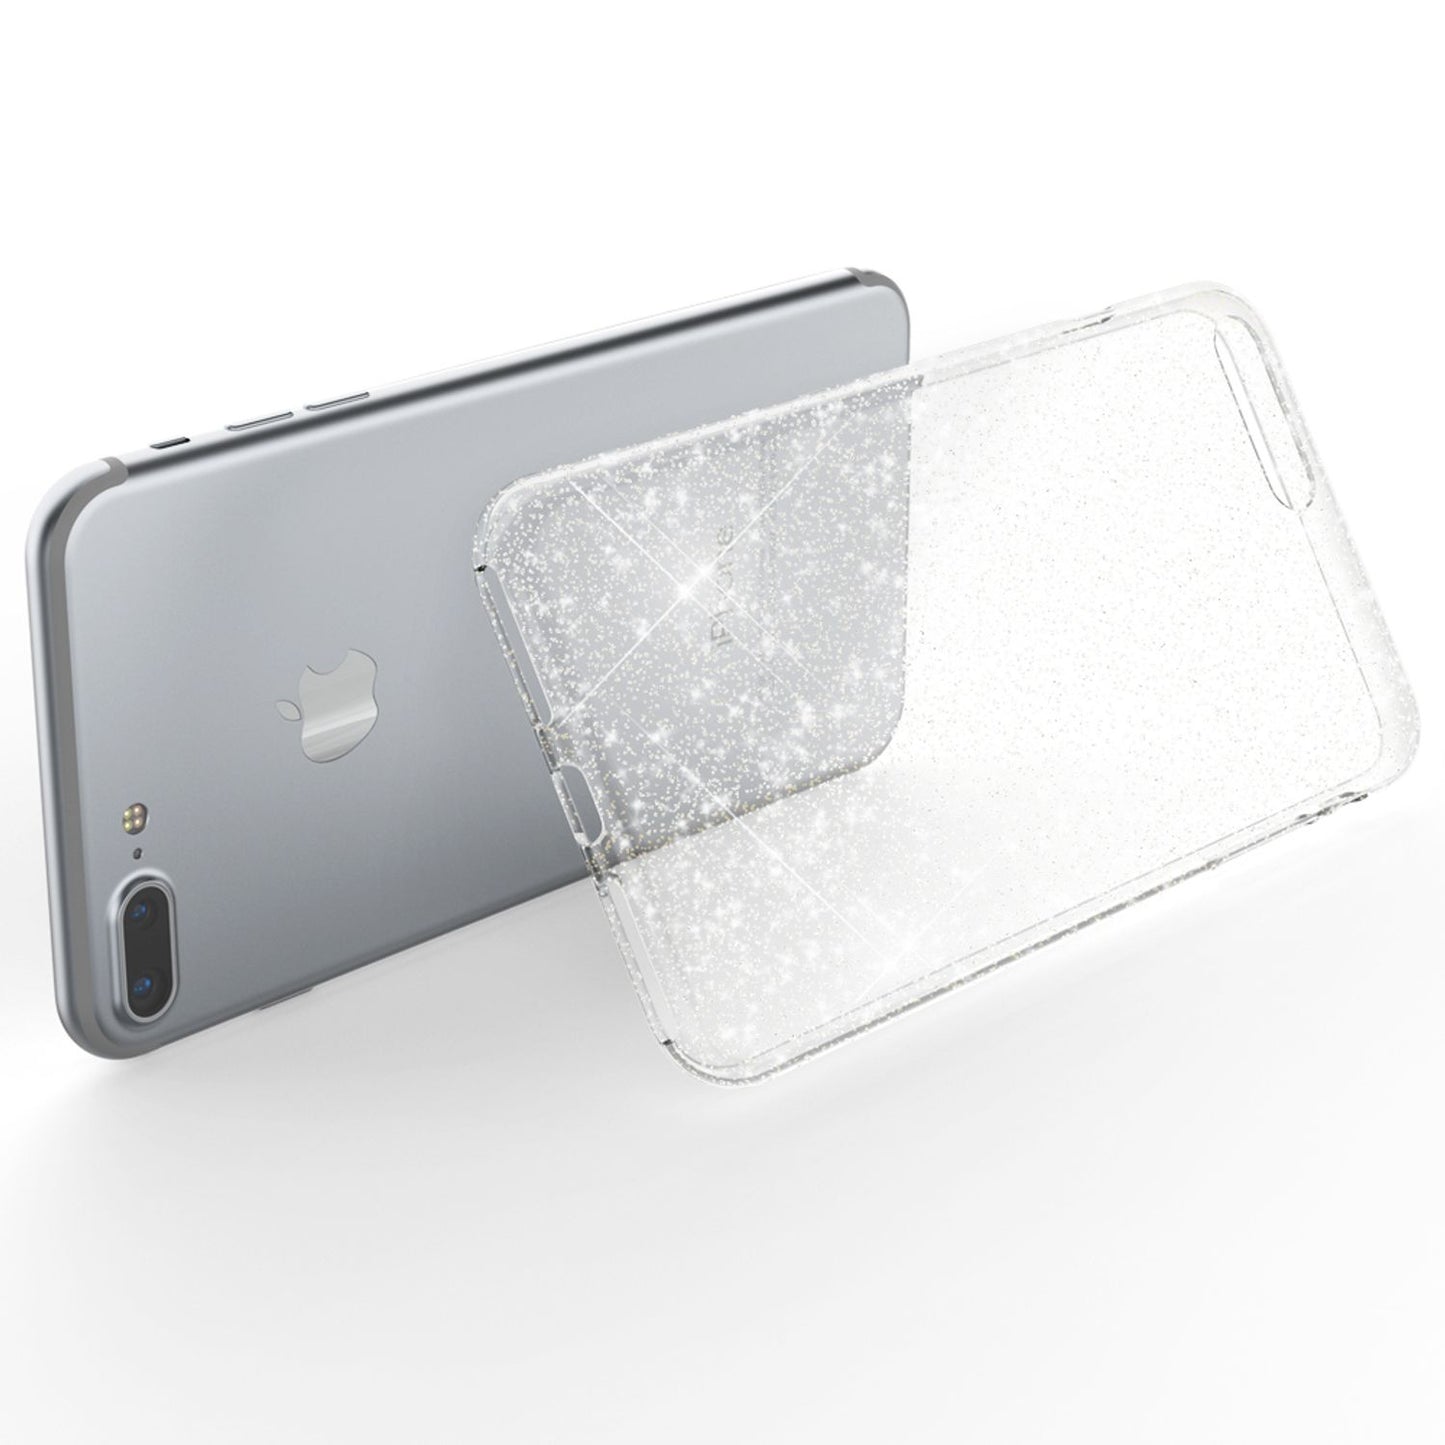 NALIA Handy Hülle für Apple iPhone 8 Plus, Glitzer Back Cover Case Silikon Etui